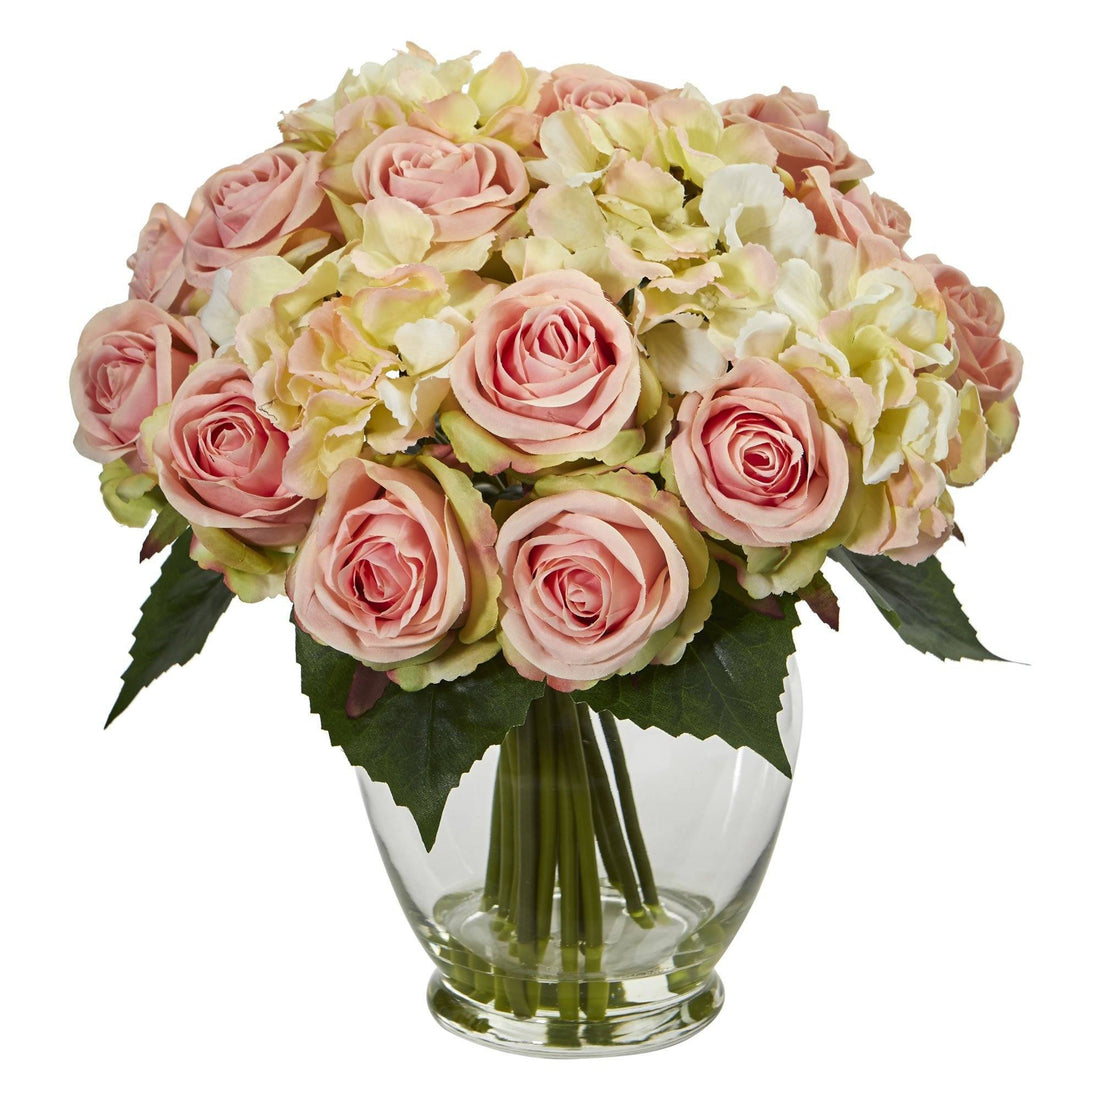 hydrangea and garden rose bouquet